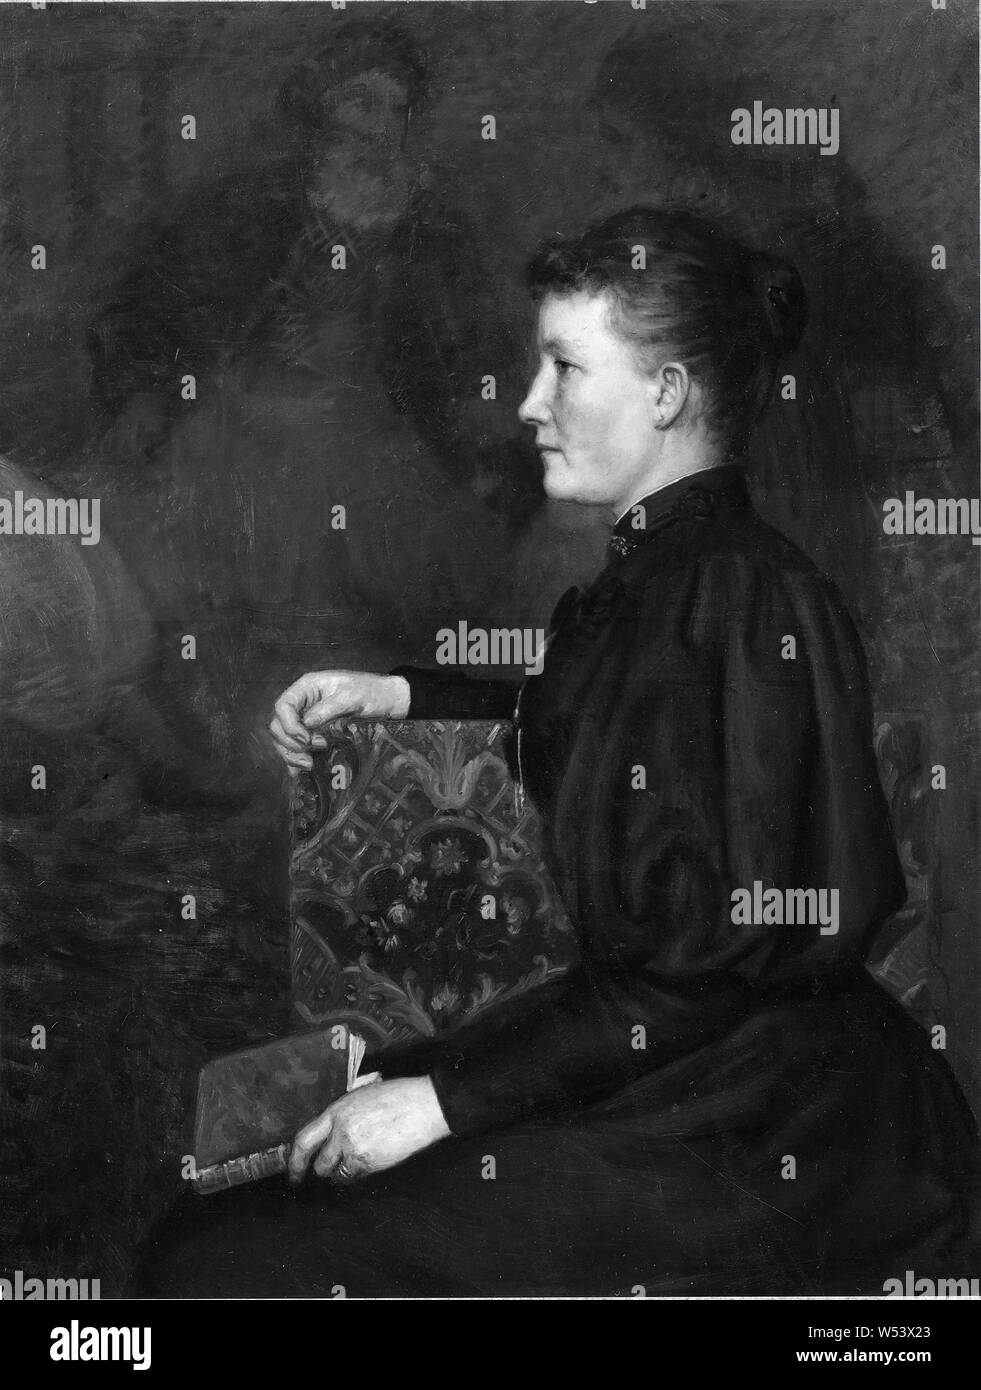 Emanuel Lindgren, Matilda Josefina Broman, 1857-1939, Malerei, Portrait, 1896, Öl, Höhe 104 cm (40,9 Zoll), Breite 77 cm (30,3 Zoll) Stockfoto